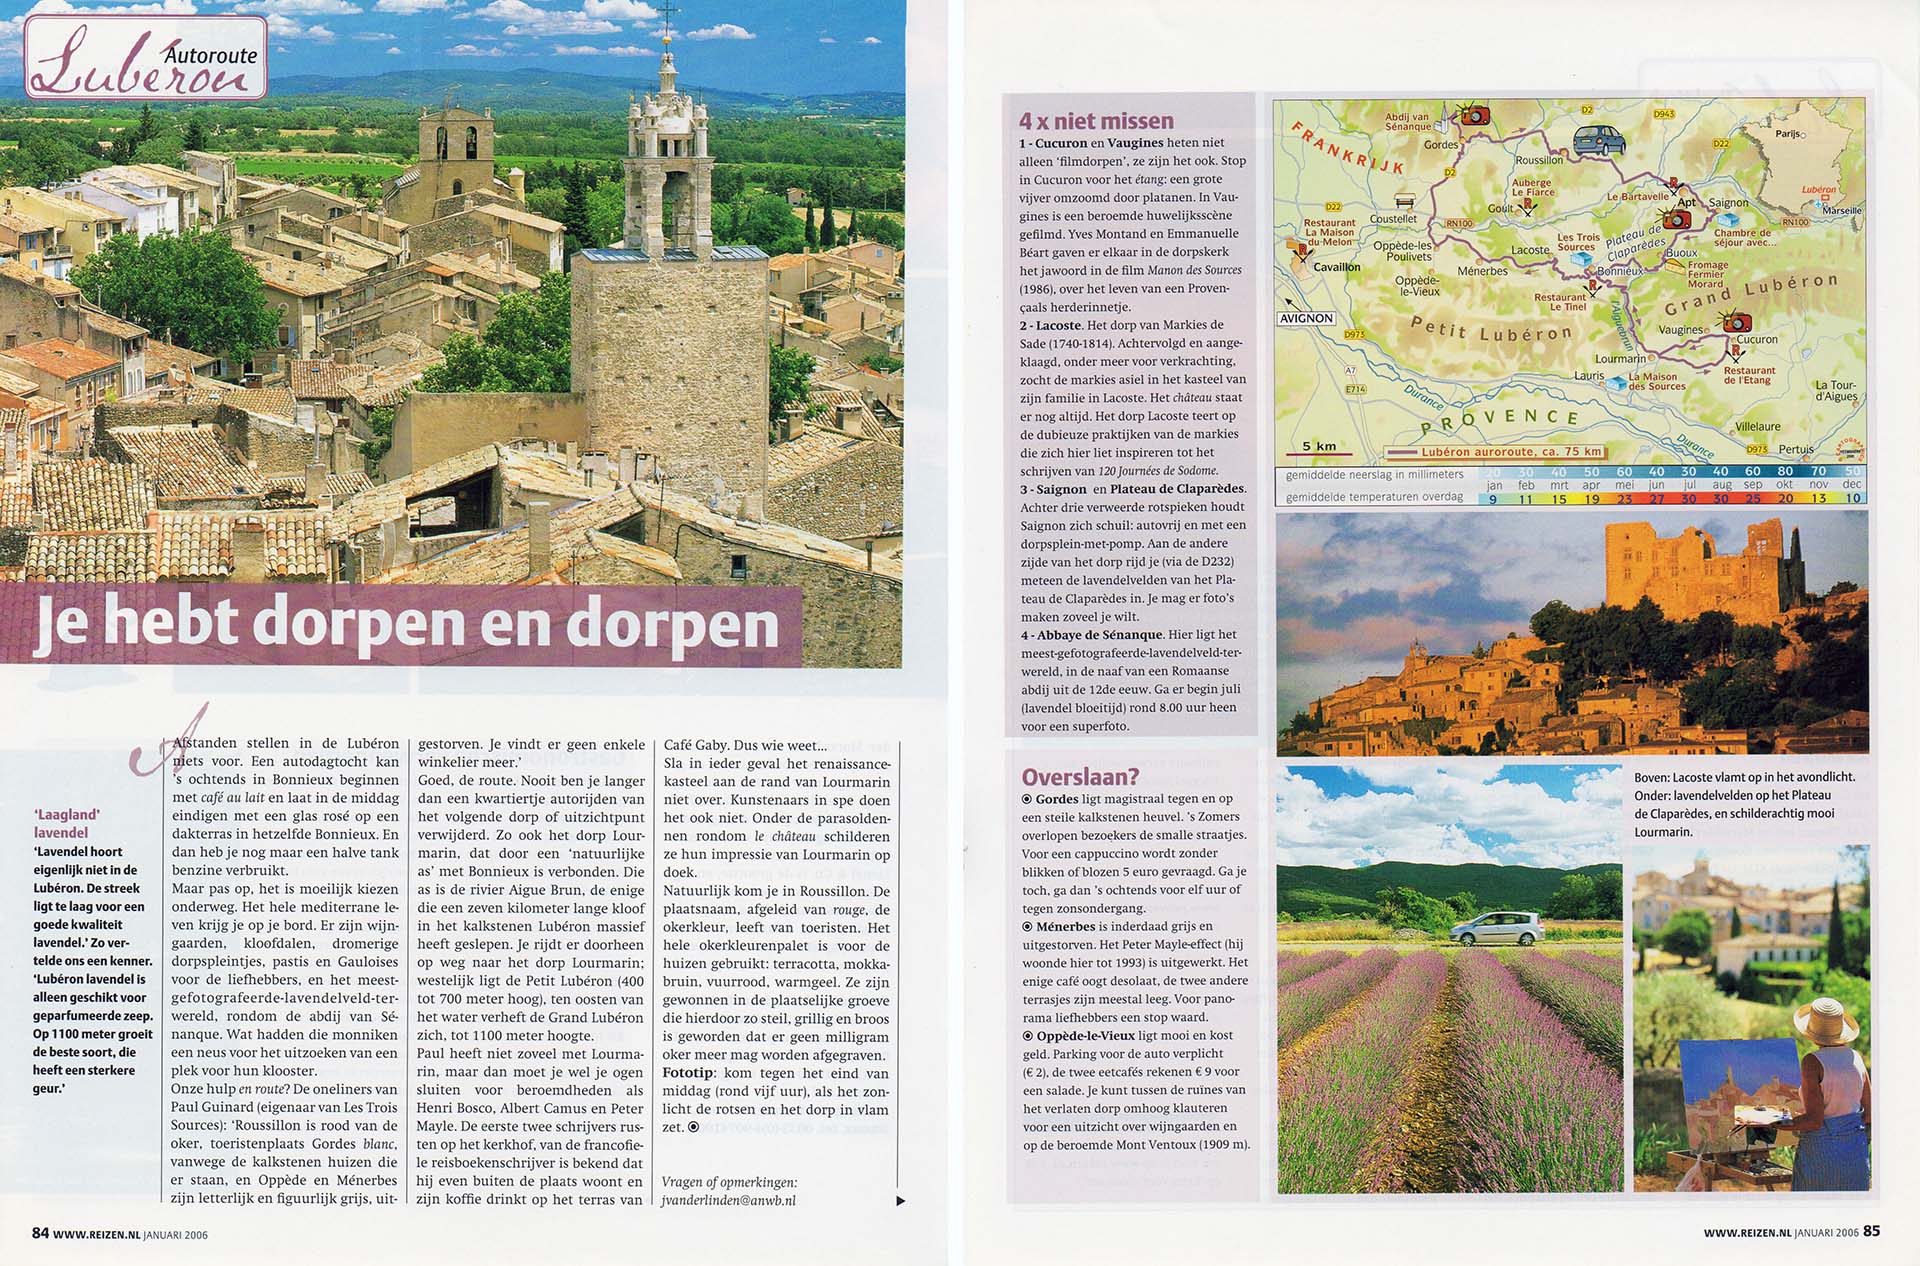 Twee pagina's uit publicatie Lubéron in ANWB Reizen magazine.